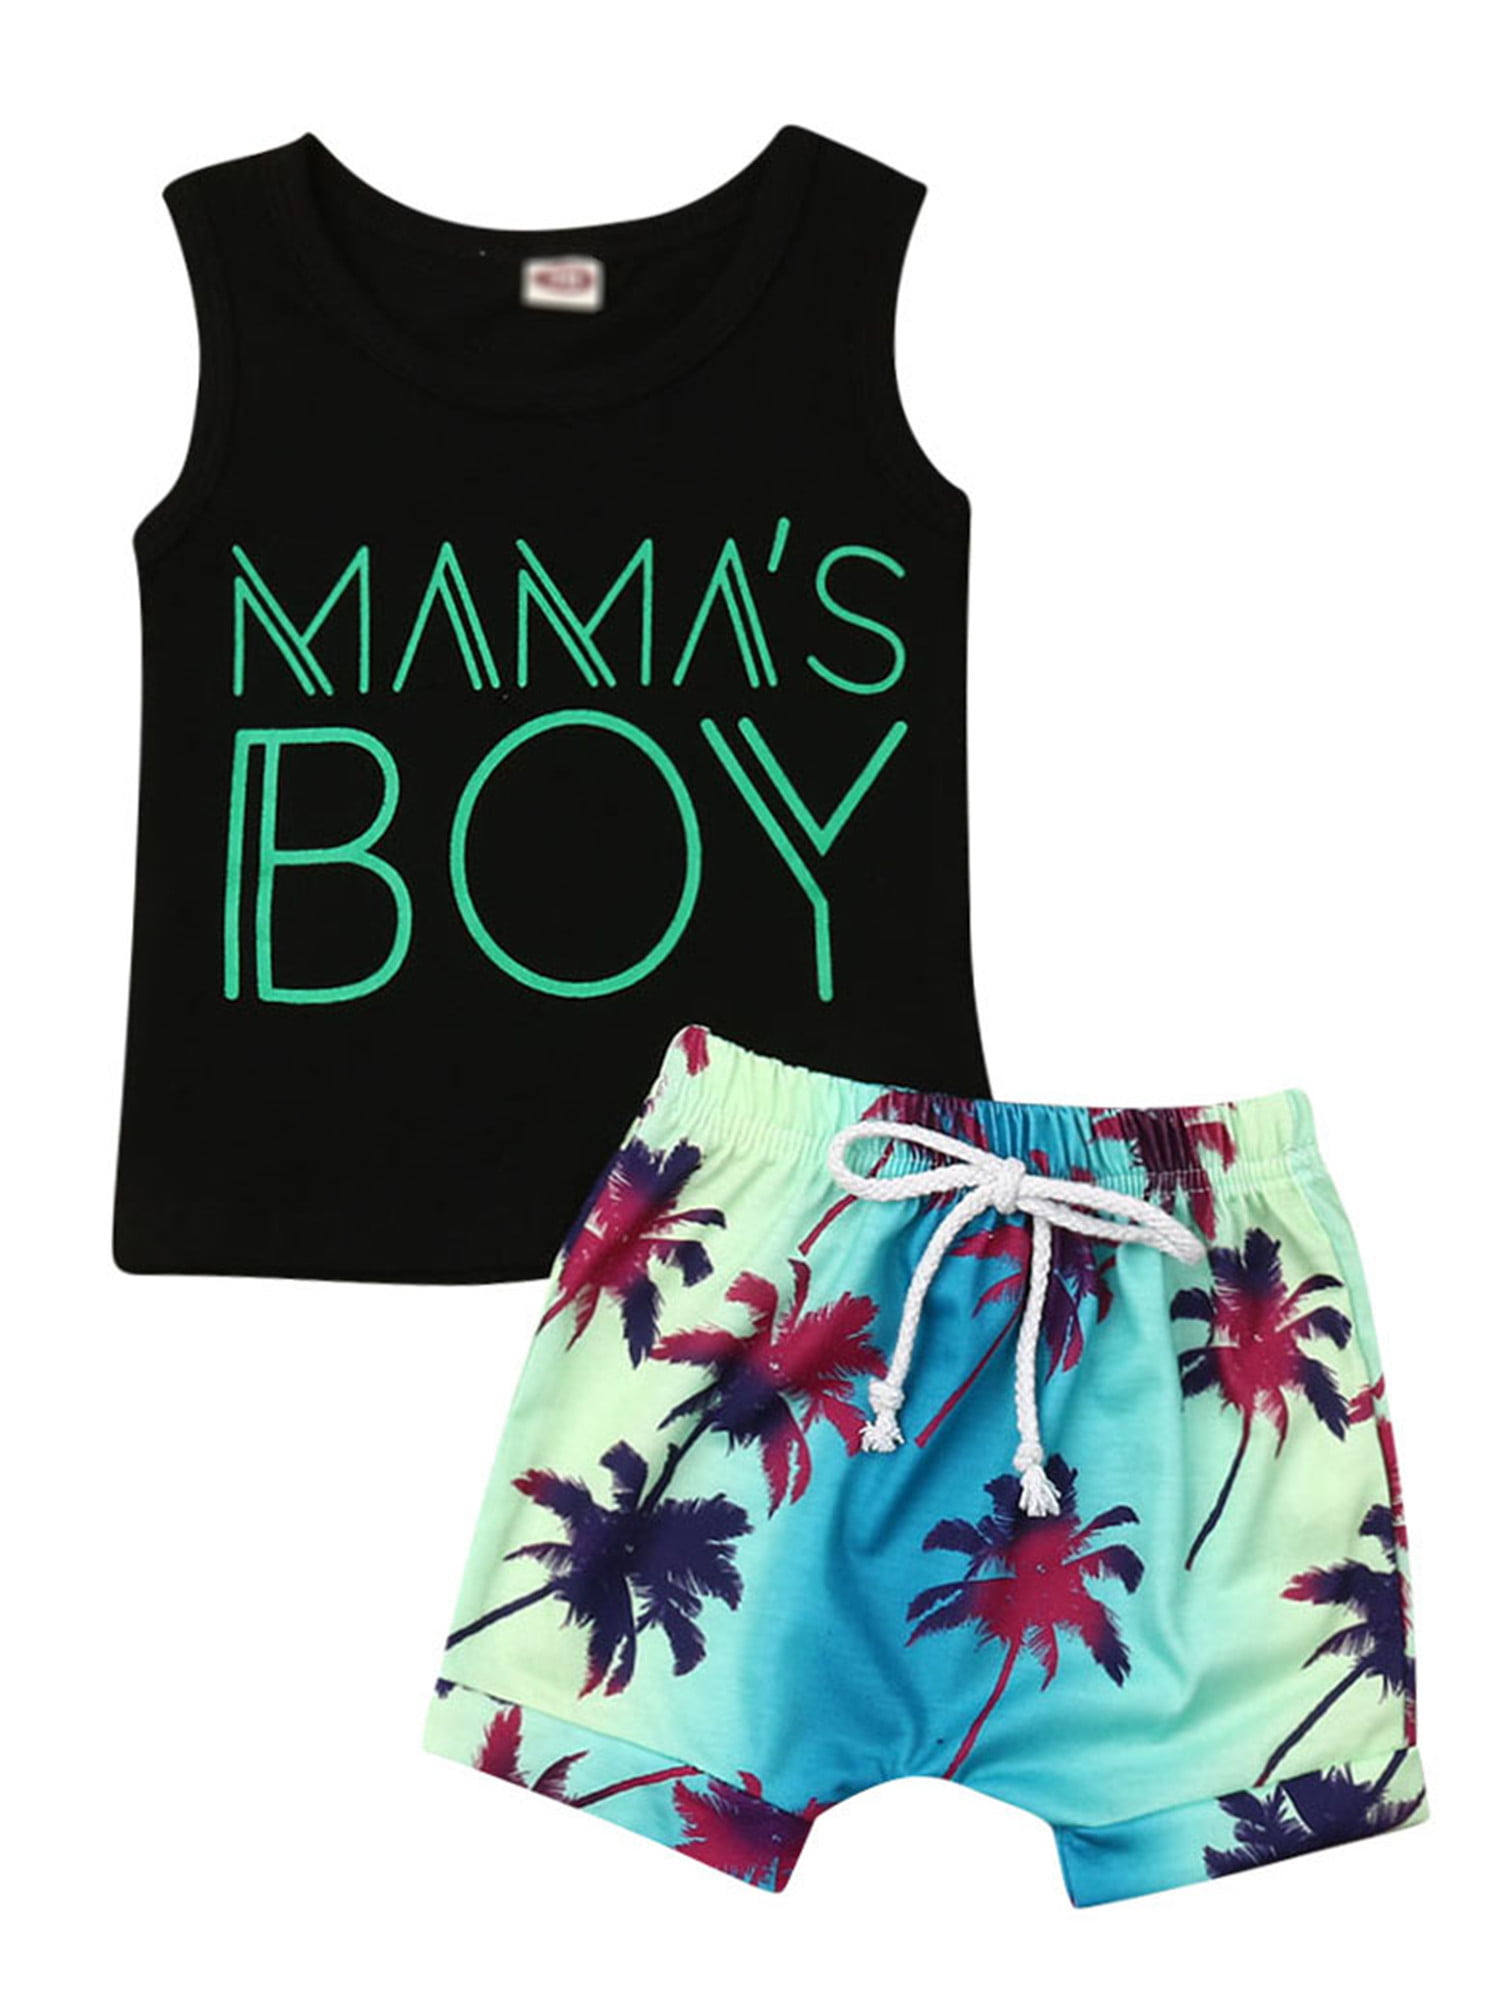 2Pcs Toddler Baby Boys Summer Clothing Sets Cute Animal Print Sleeveless Tank Tops T-Shirt+Palm Shorts Outfits